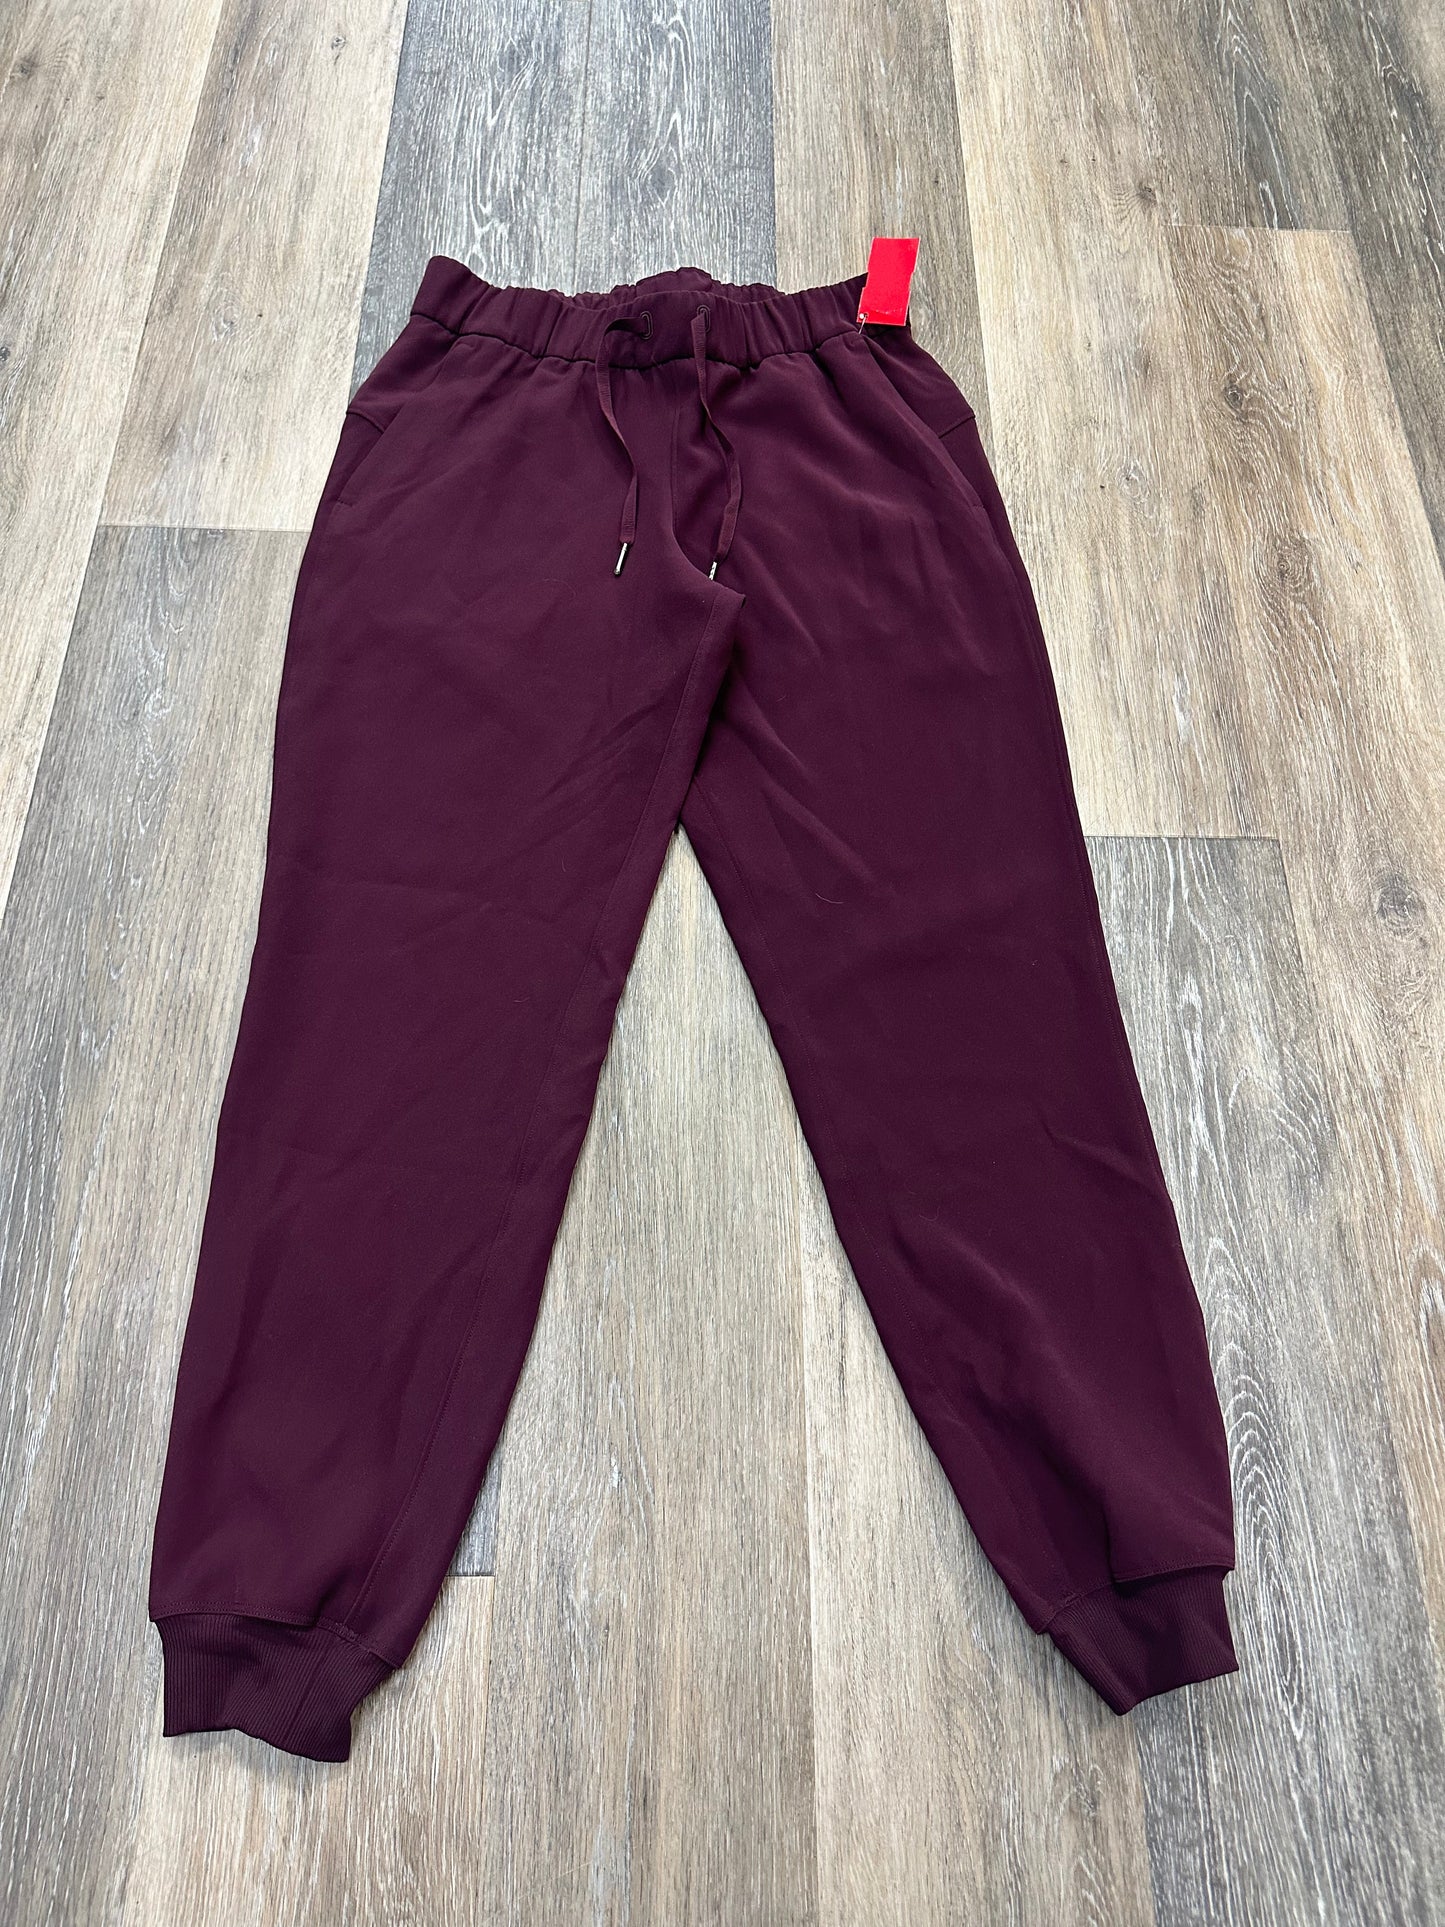 Red Athletic Pants Lululemon, Size 6